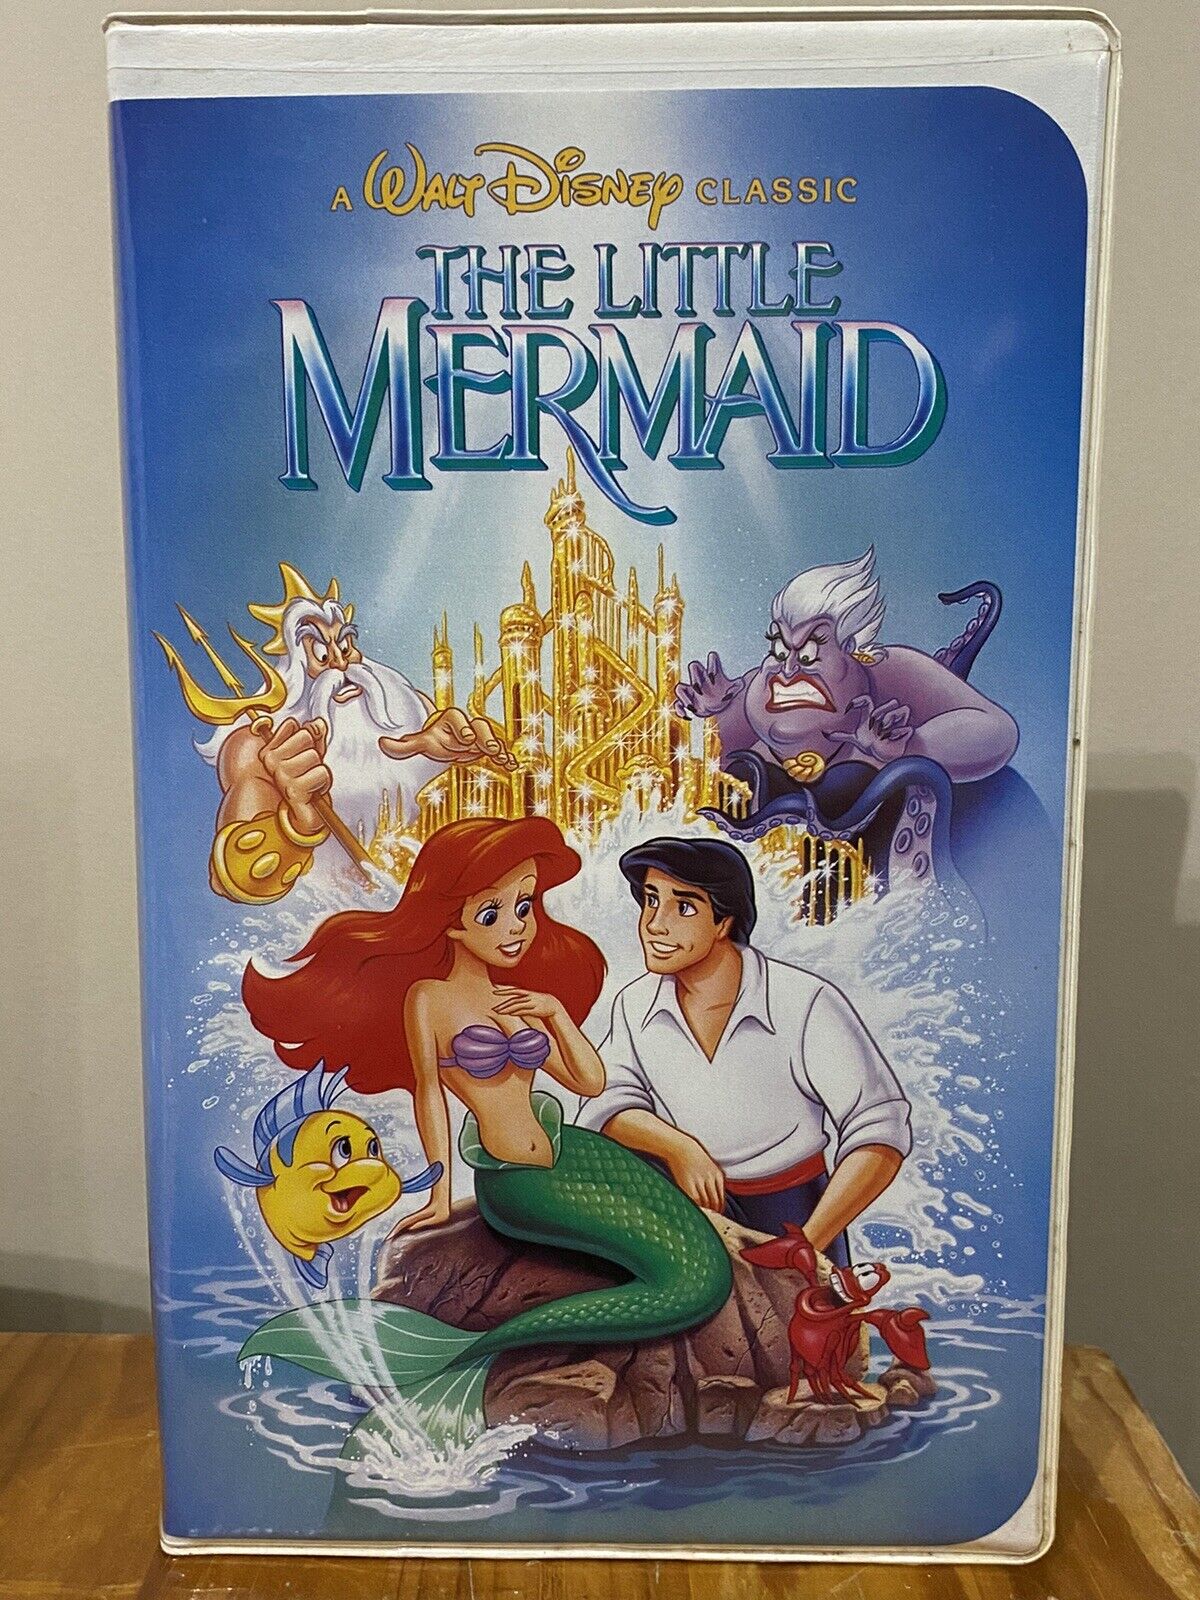 RARE The Little Mermaid Original Banned Art Cover, Black Diamond Edition